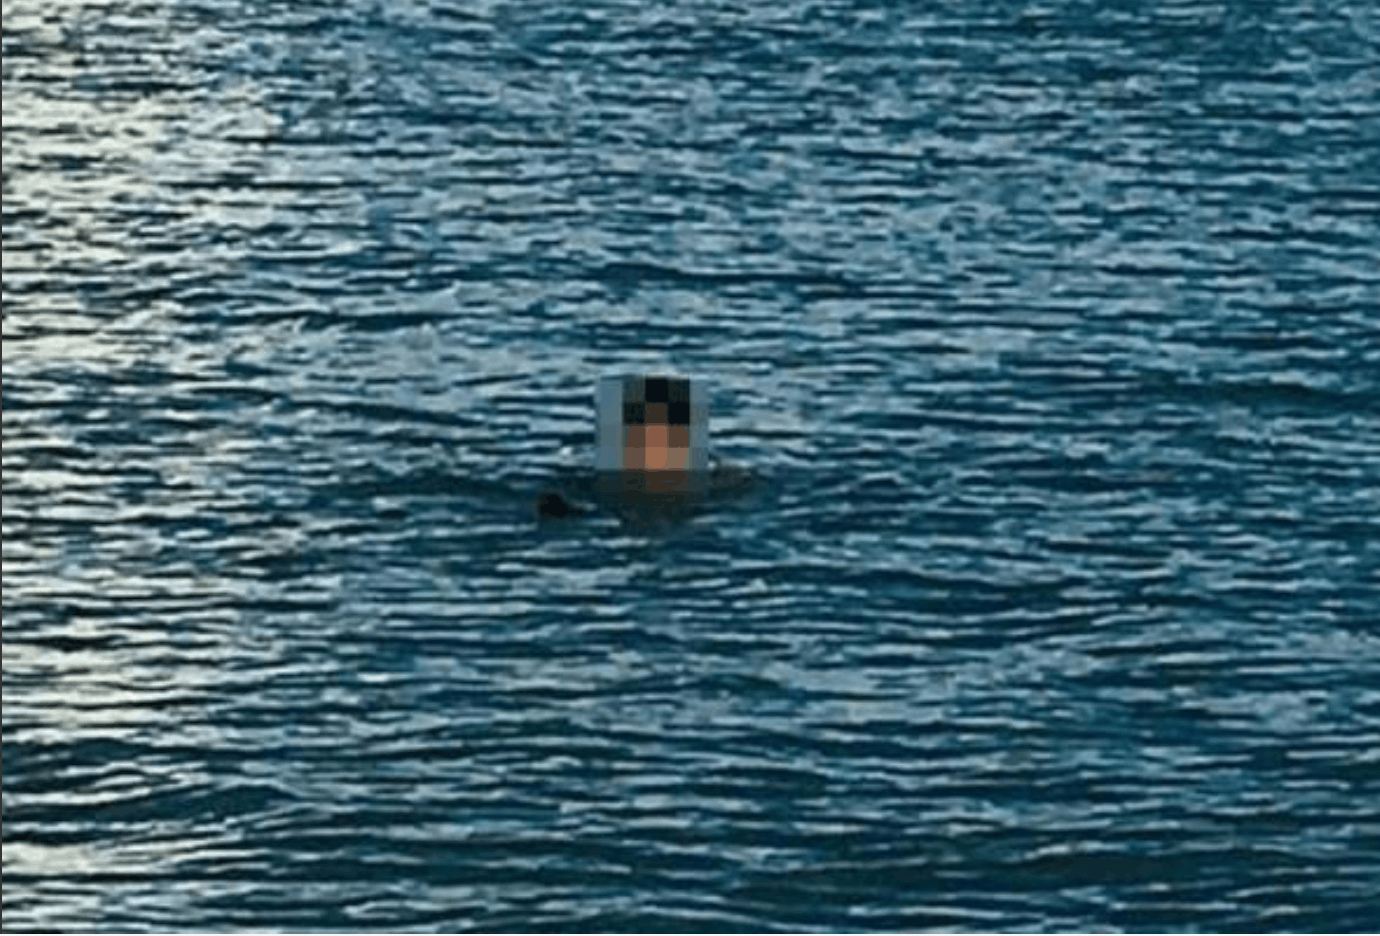 Man attempts to swim across penang straits